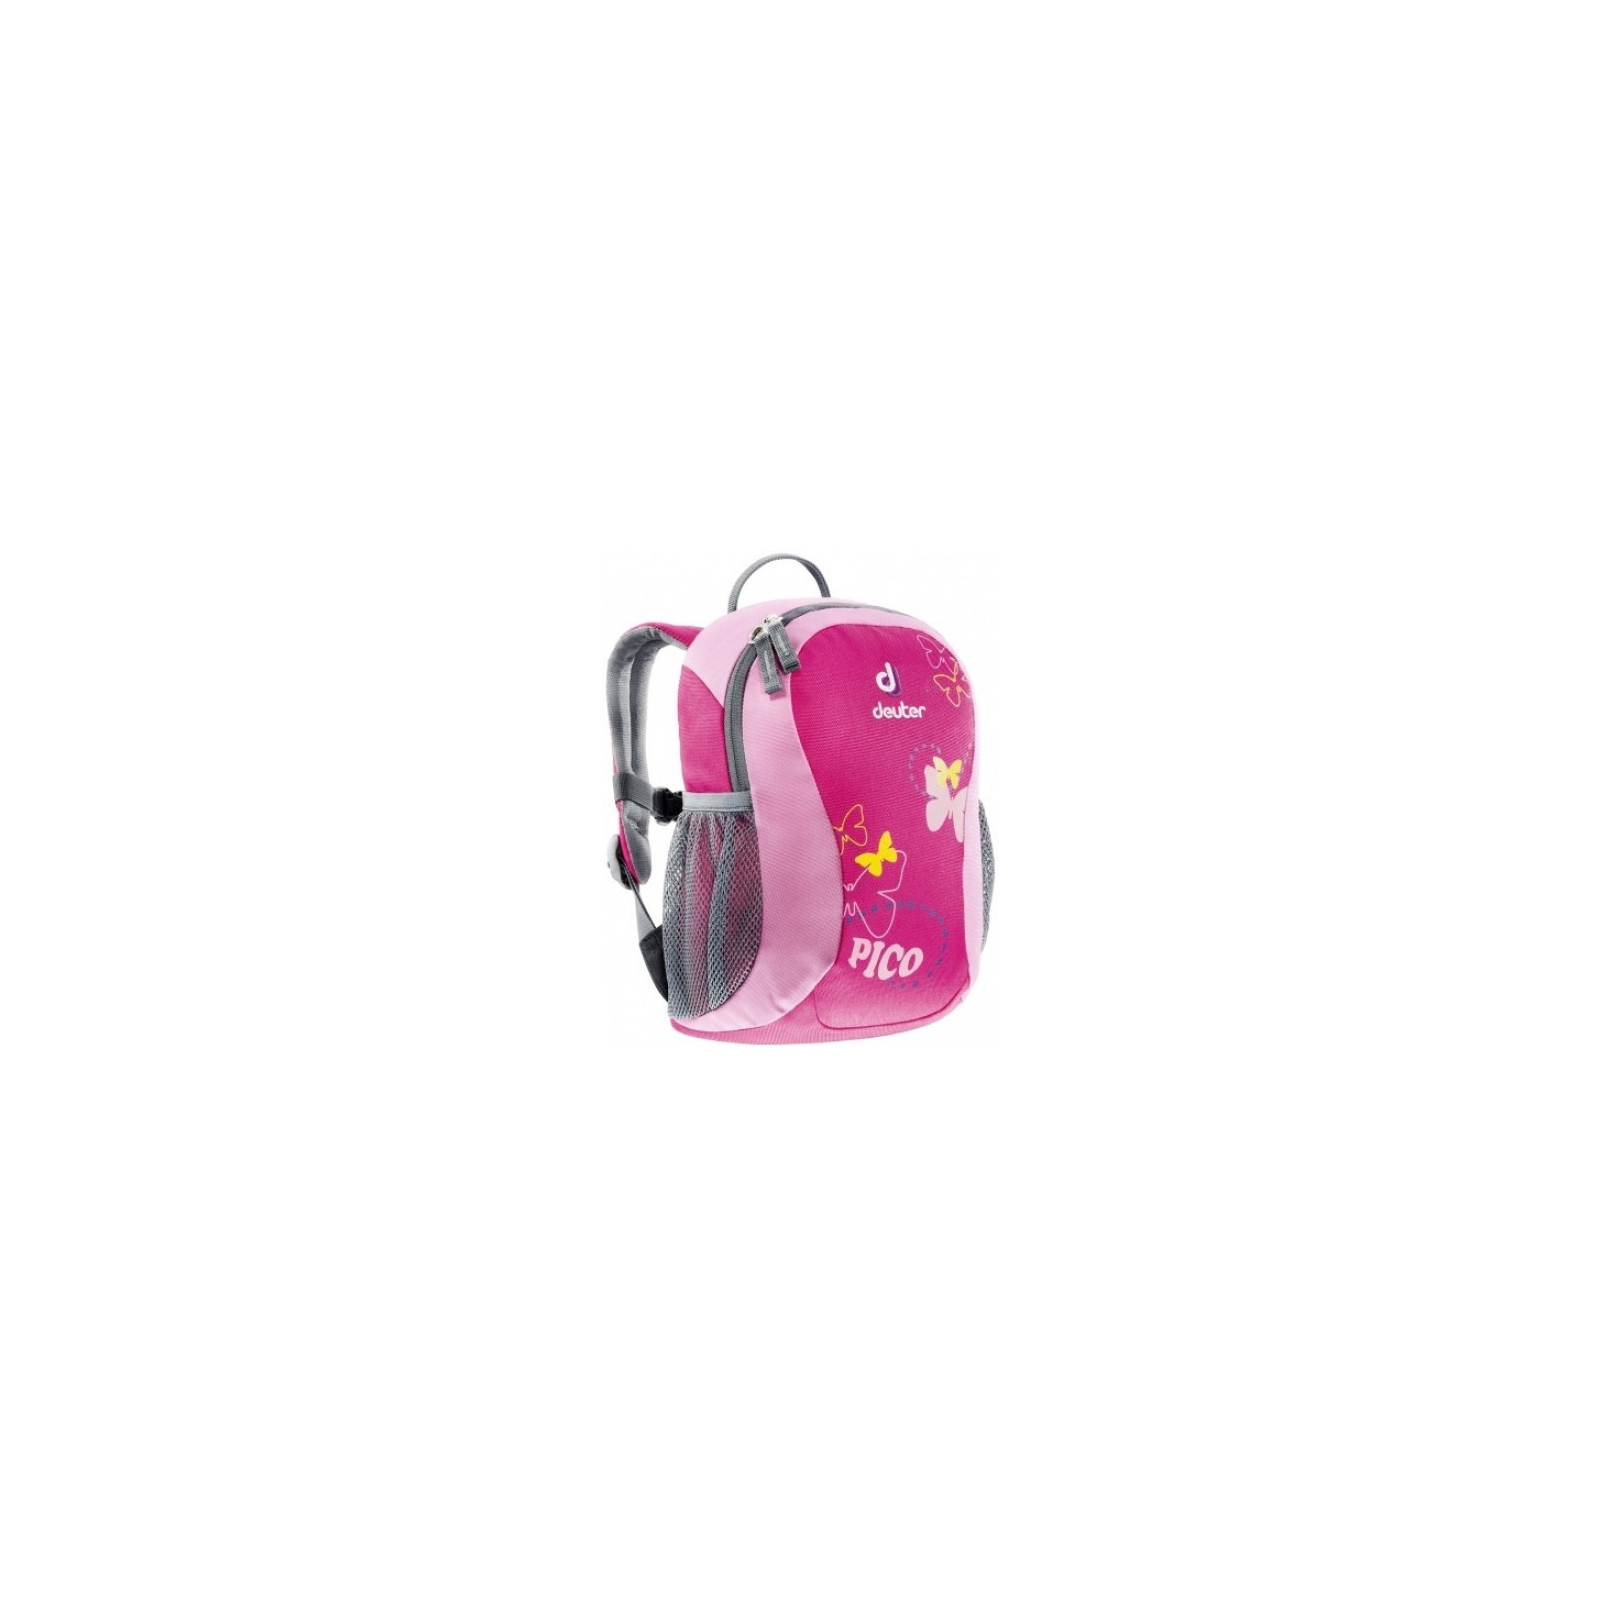 Рюкзак туристический Deuter Pico pink (36043 5040)